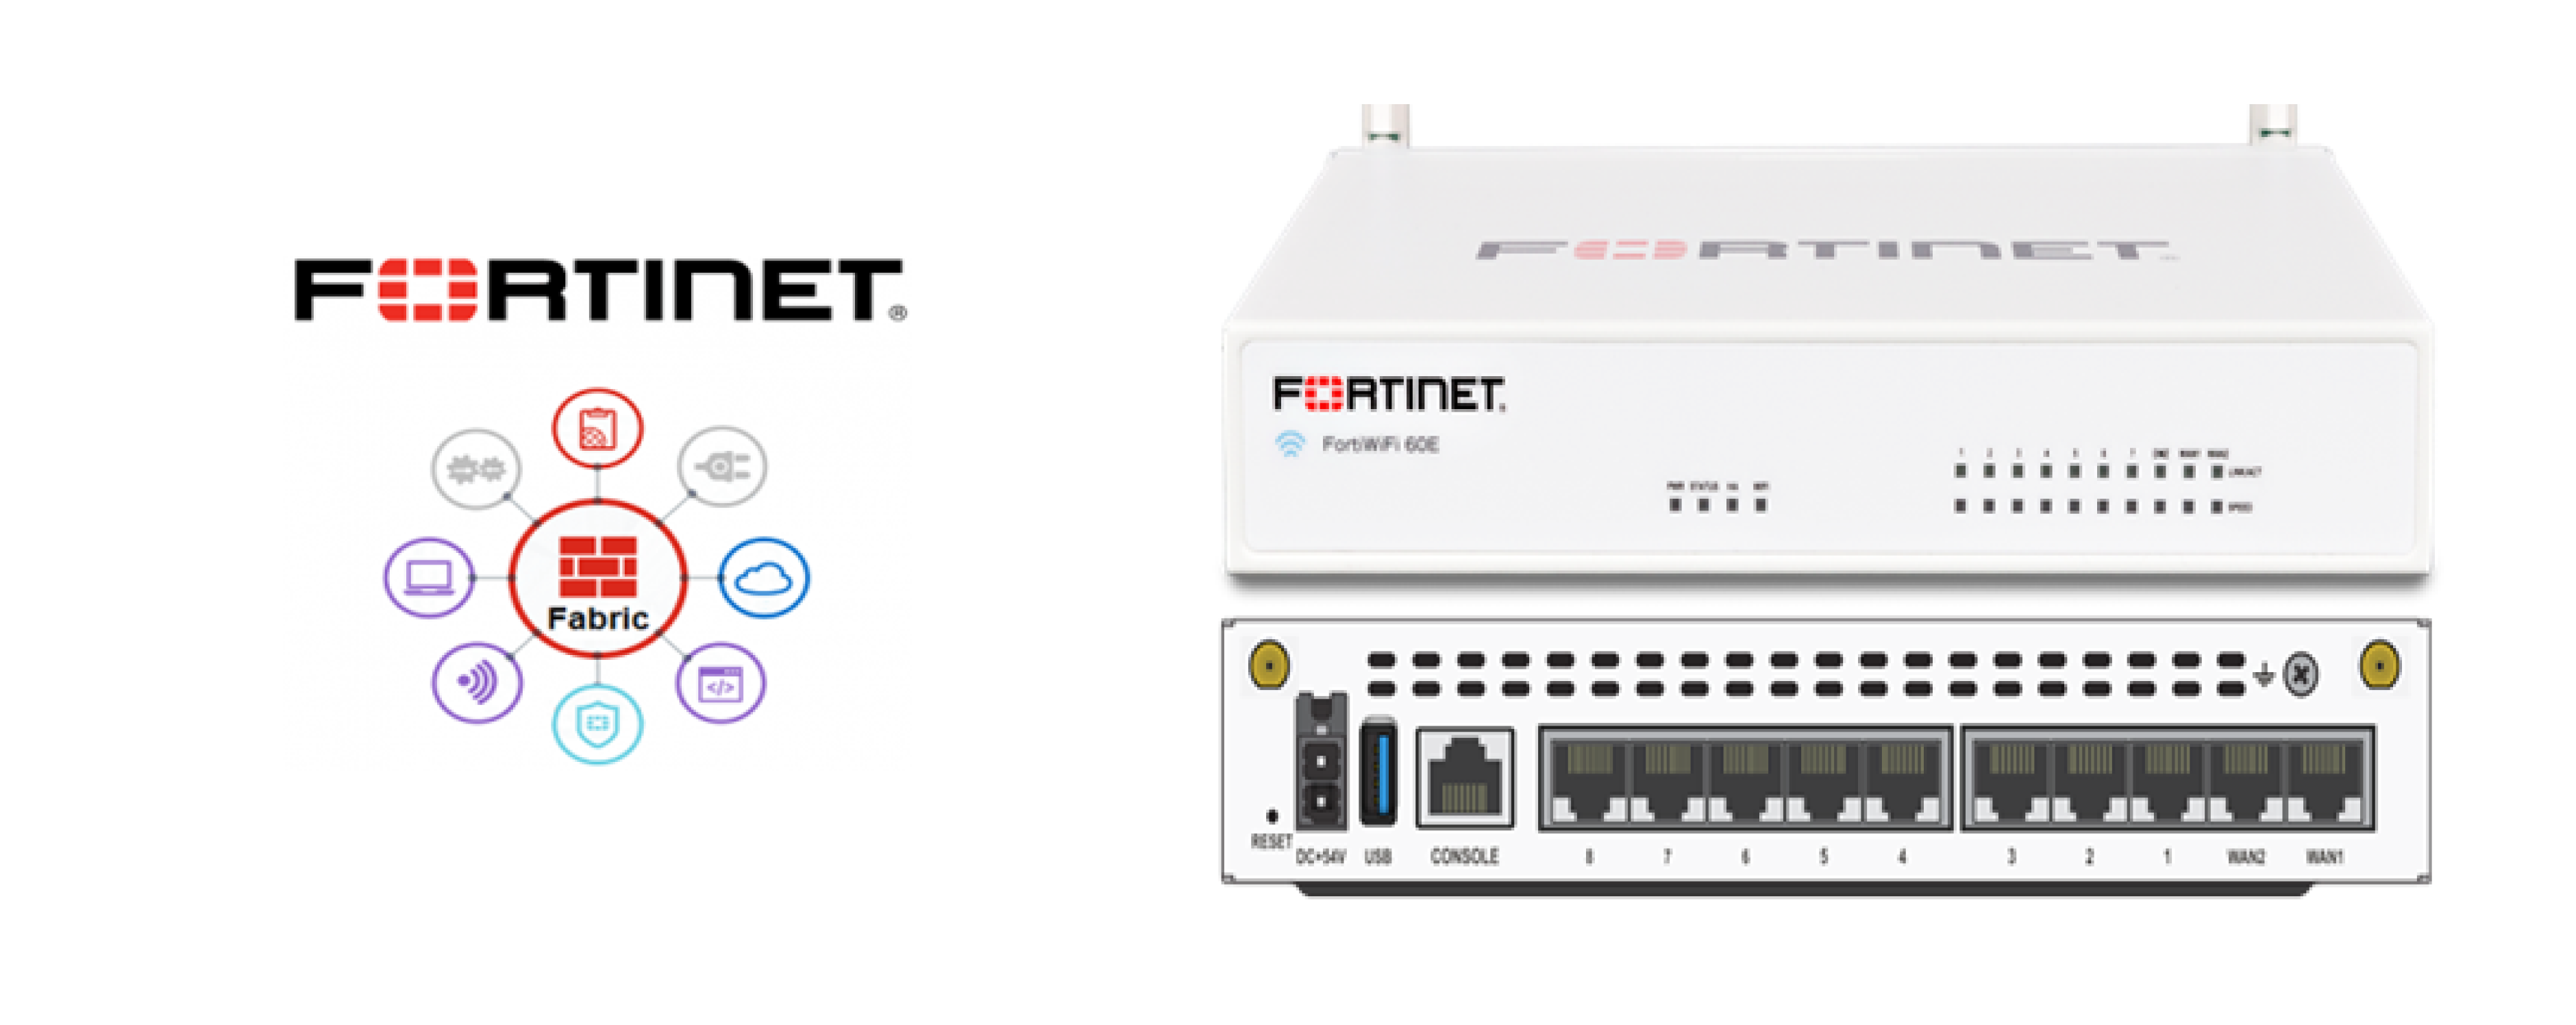 Fortinet Brand Firewalls